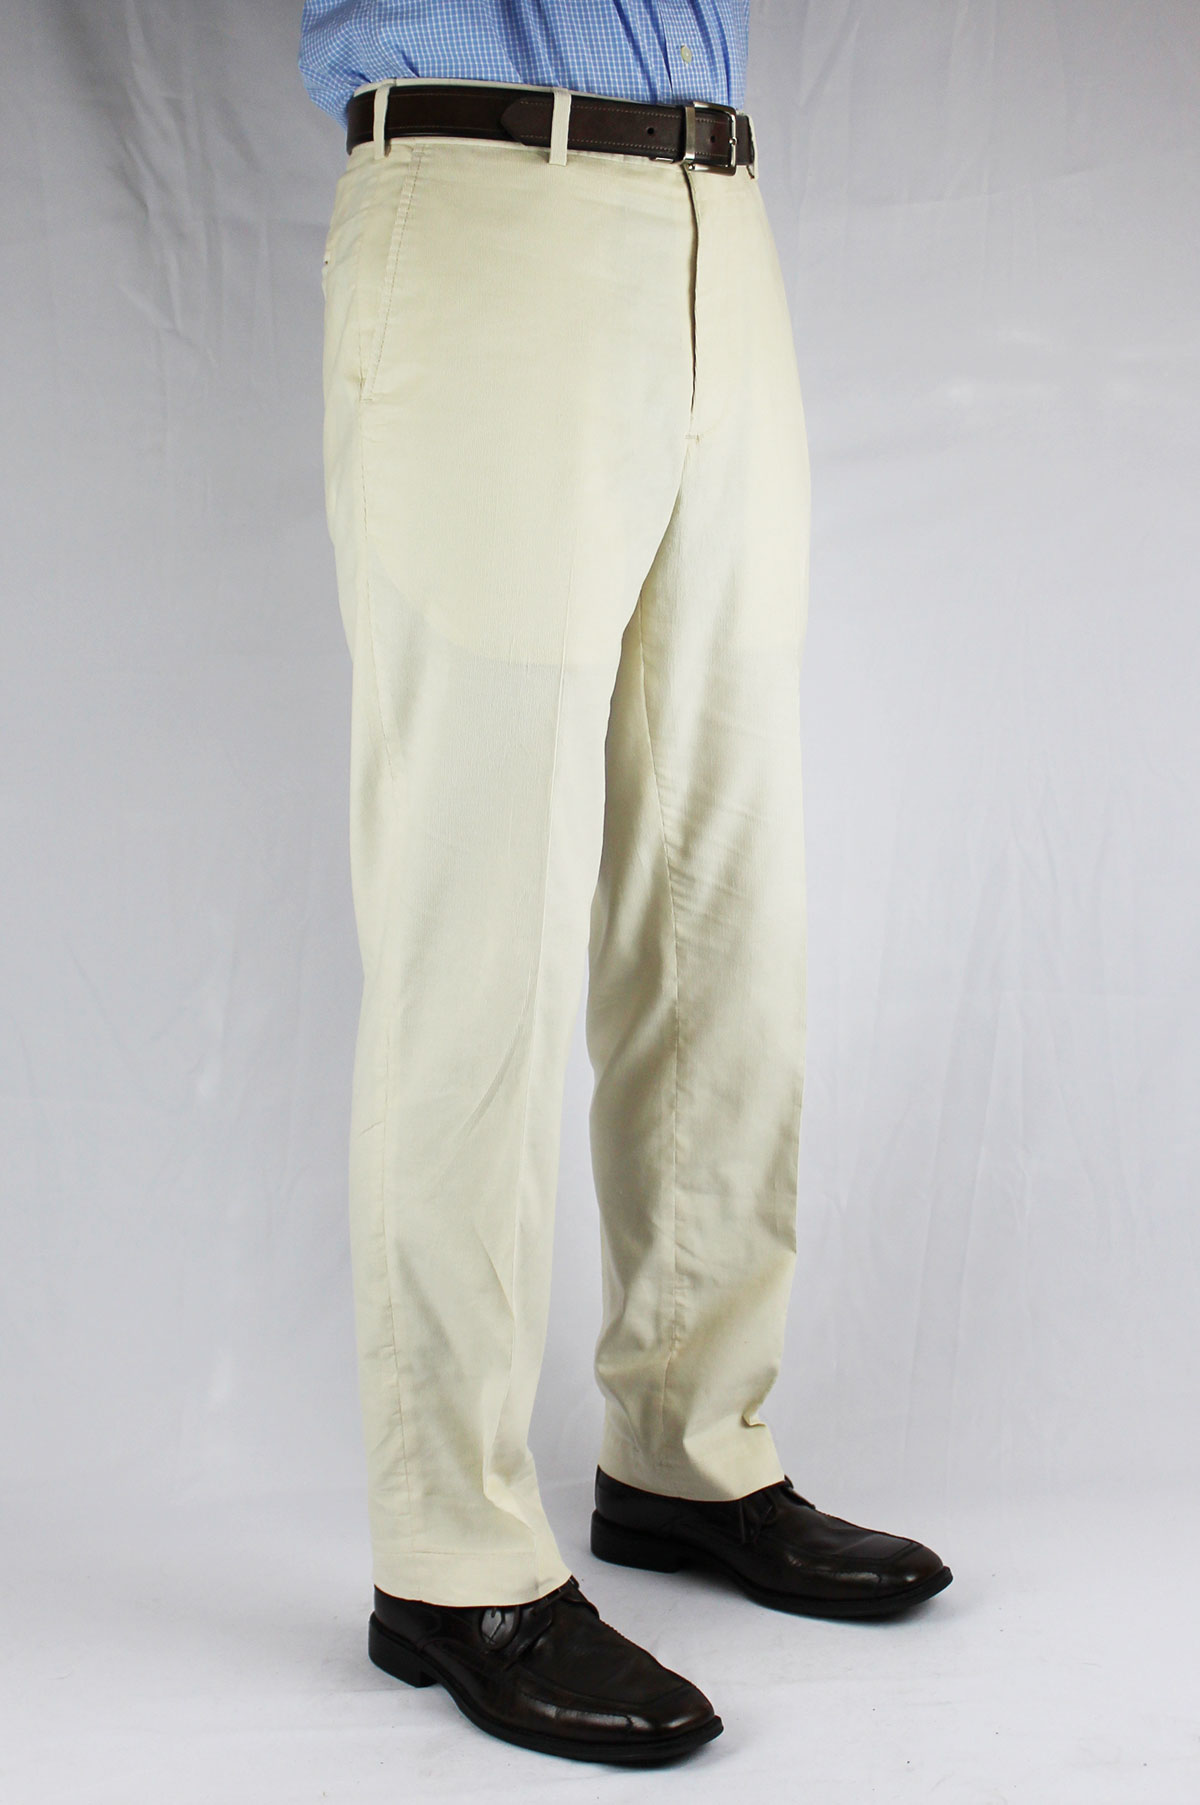 82: 21 Wale Dalton Feathercord Pants | All American Khakis